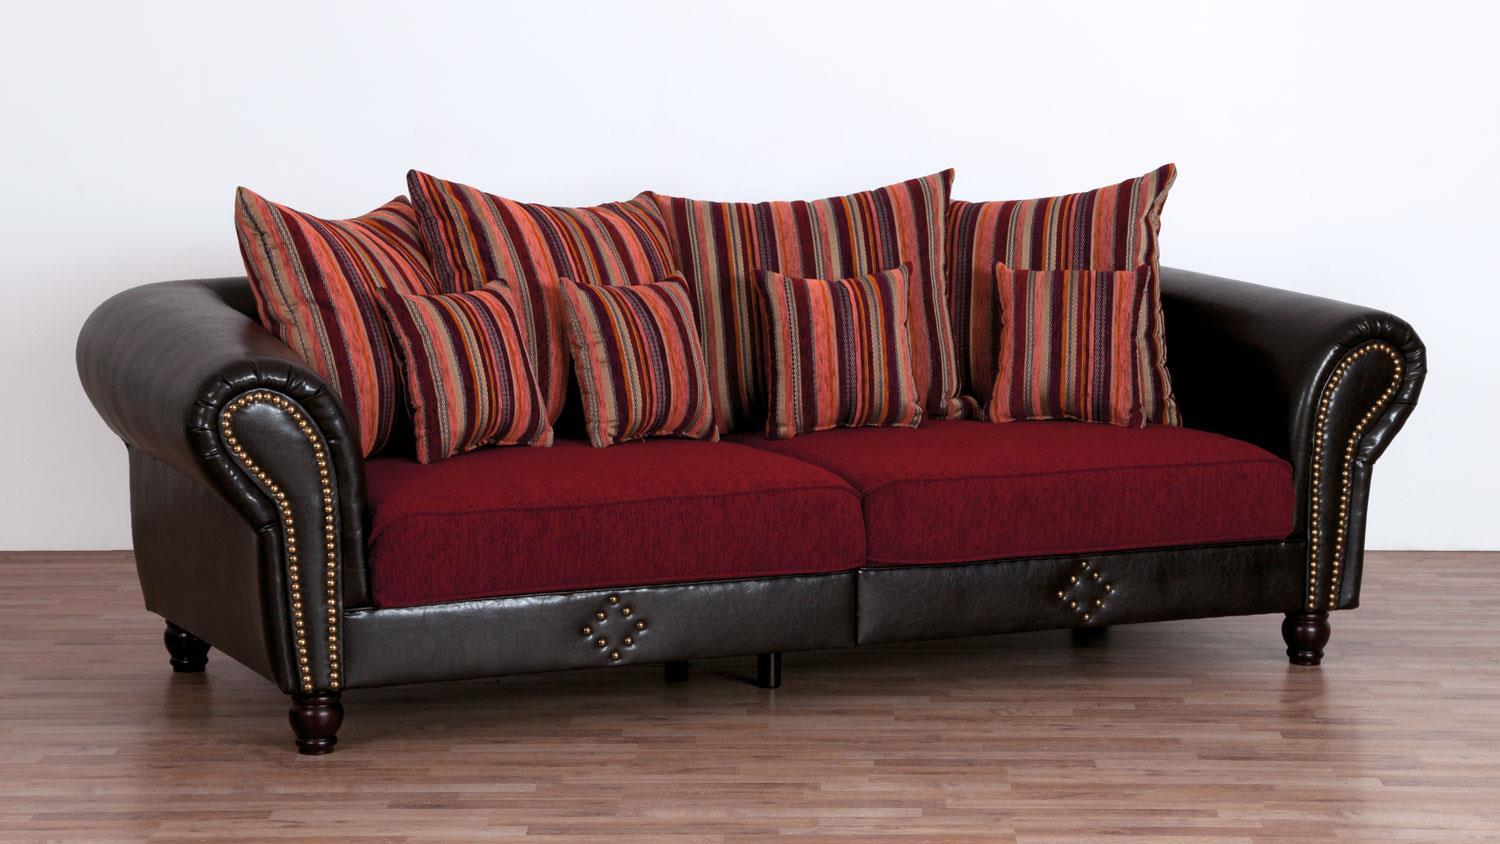 Big Sofa 'Corin' inkl. Kissen, antik dunkel braun und rot Bild 1